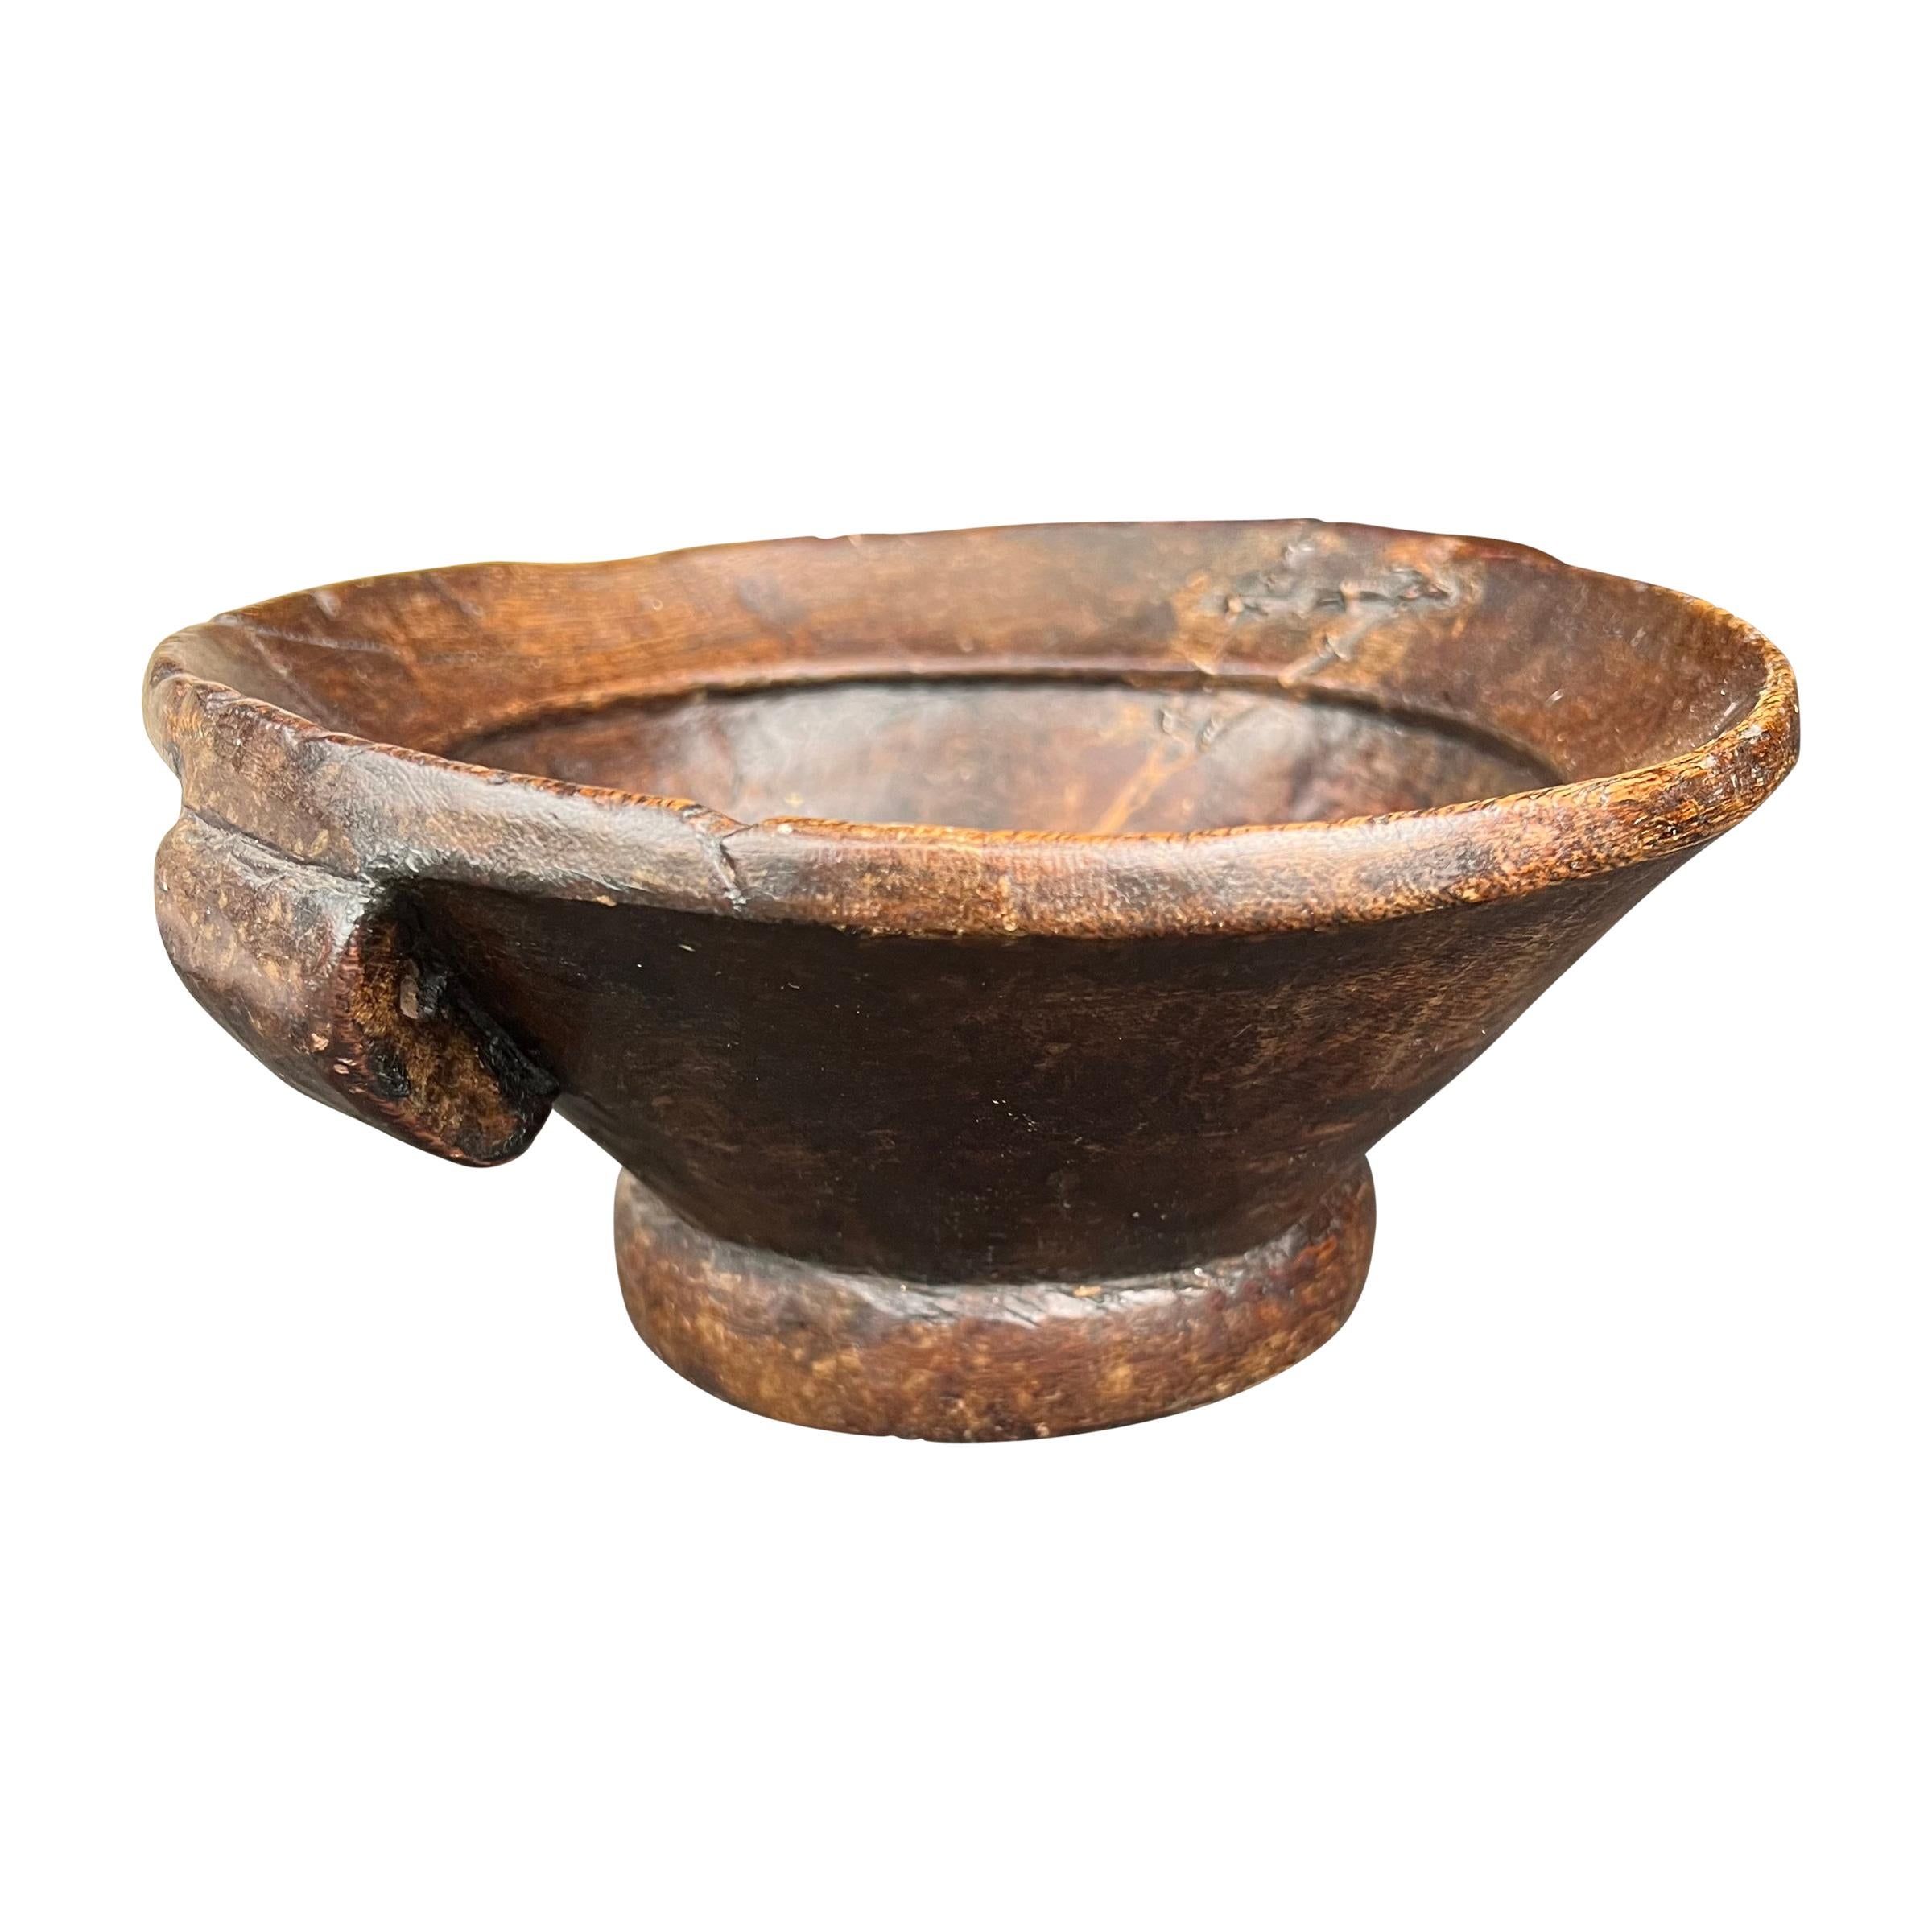 Primitive 19th Century Wooden Bowl For Sale